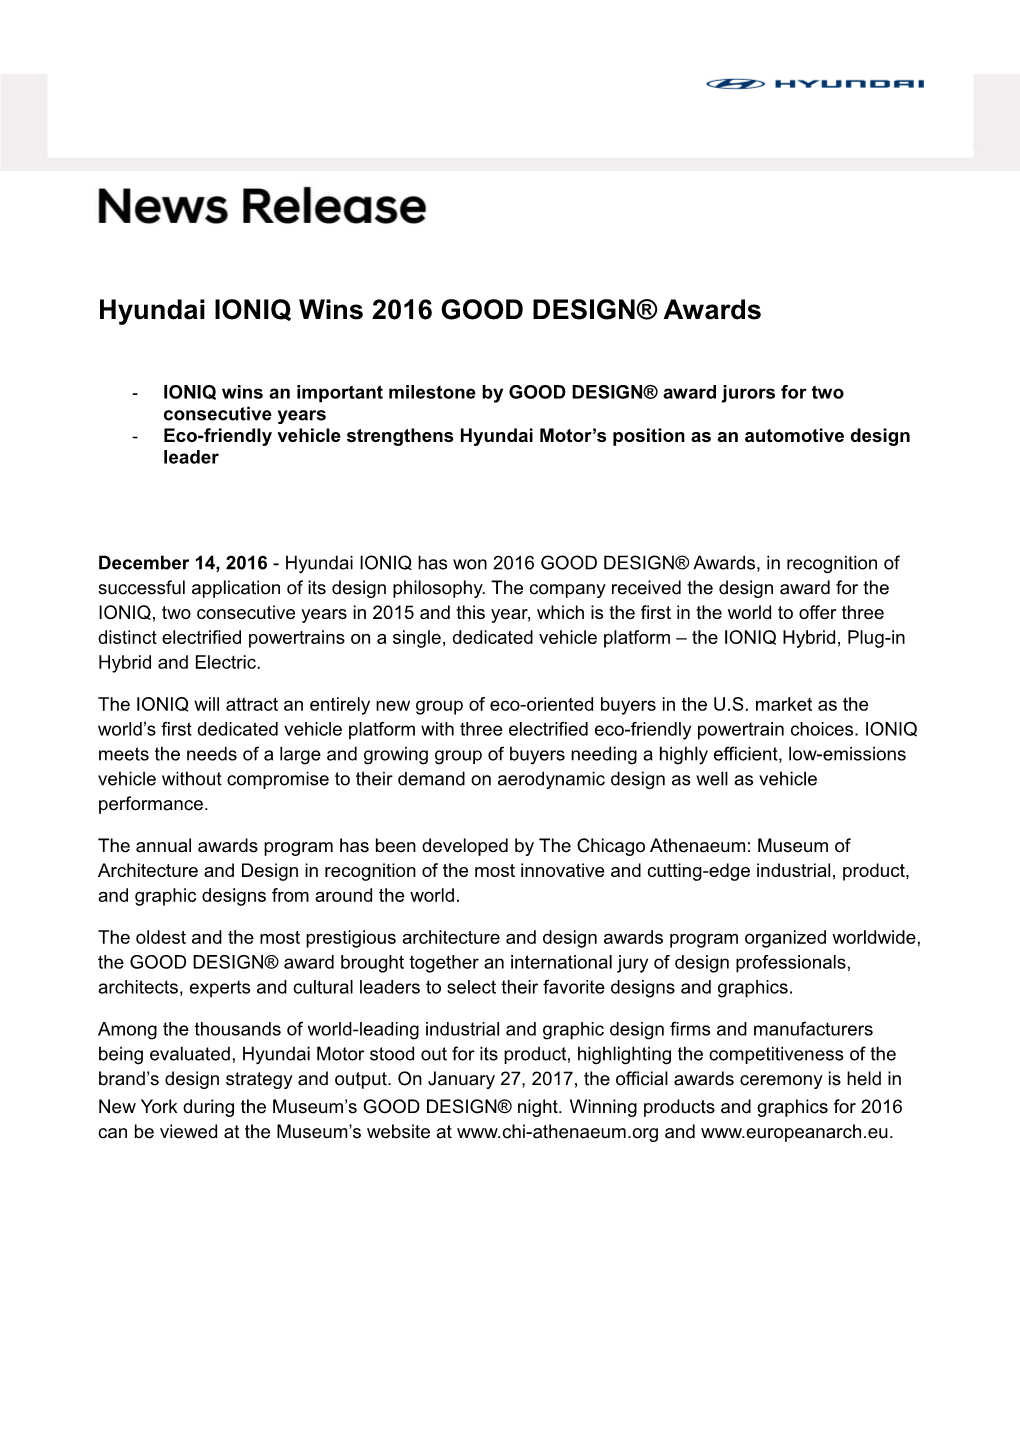 Hyundai IONIQ Wins 2016 GOOD DESIGN Awards